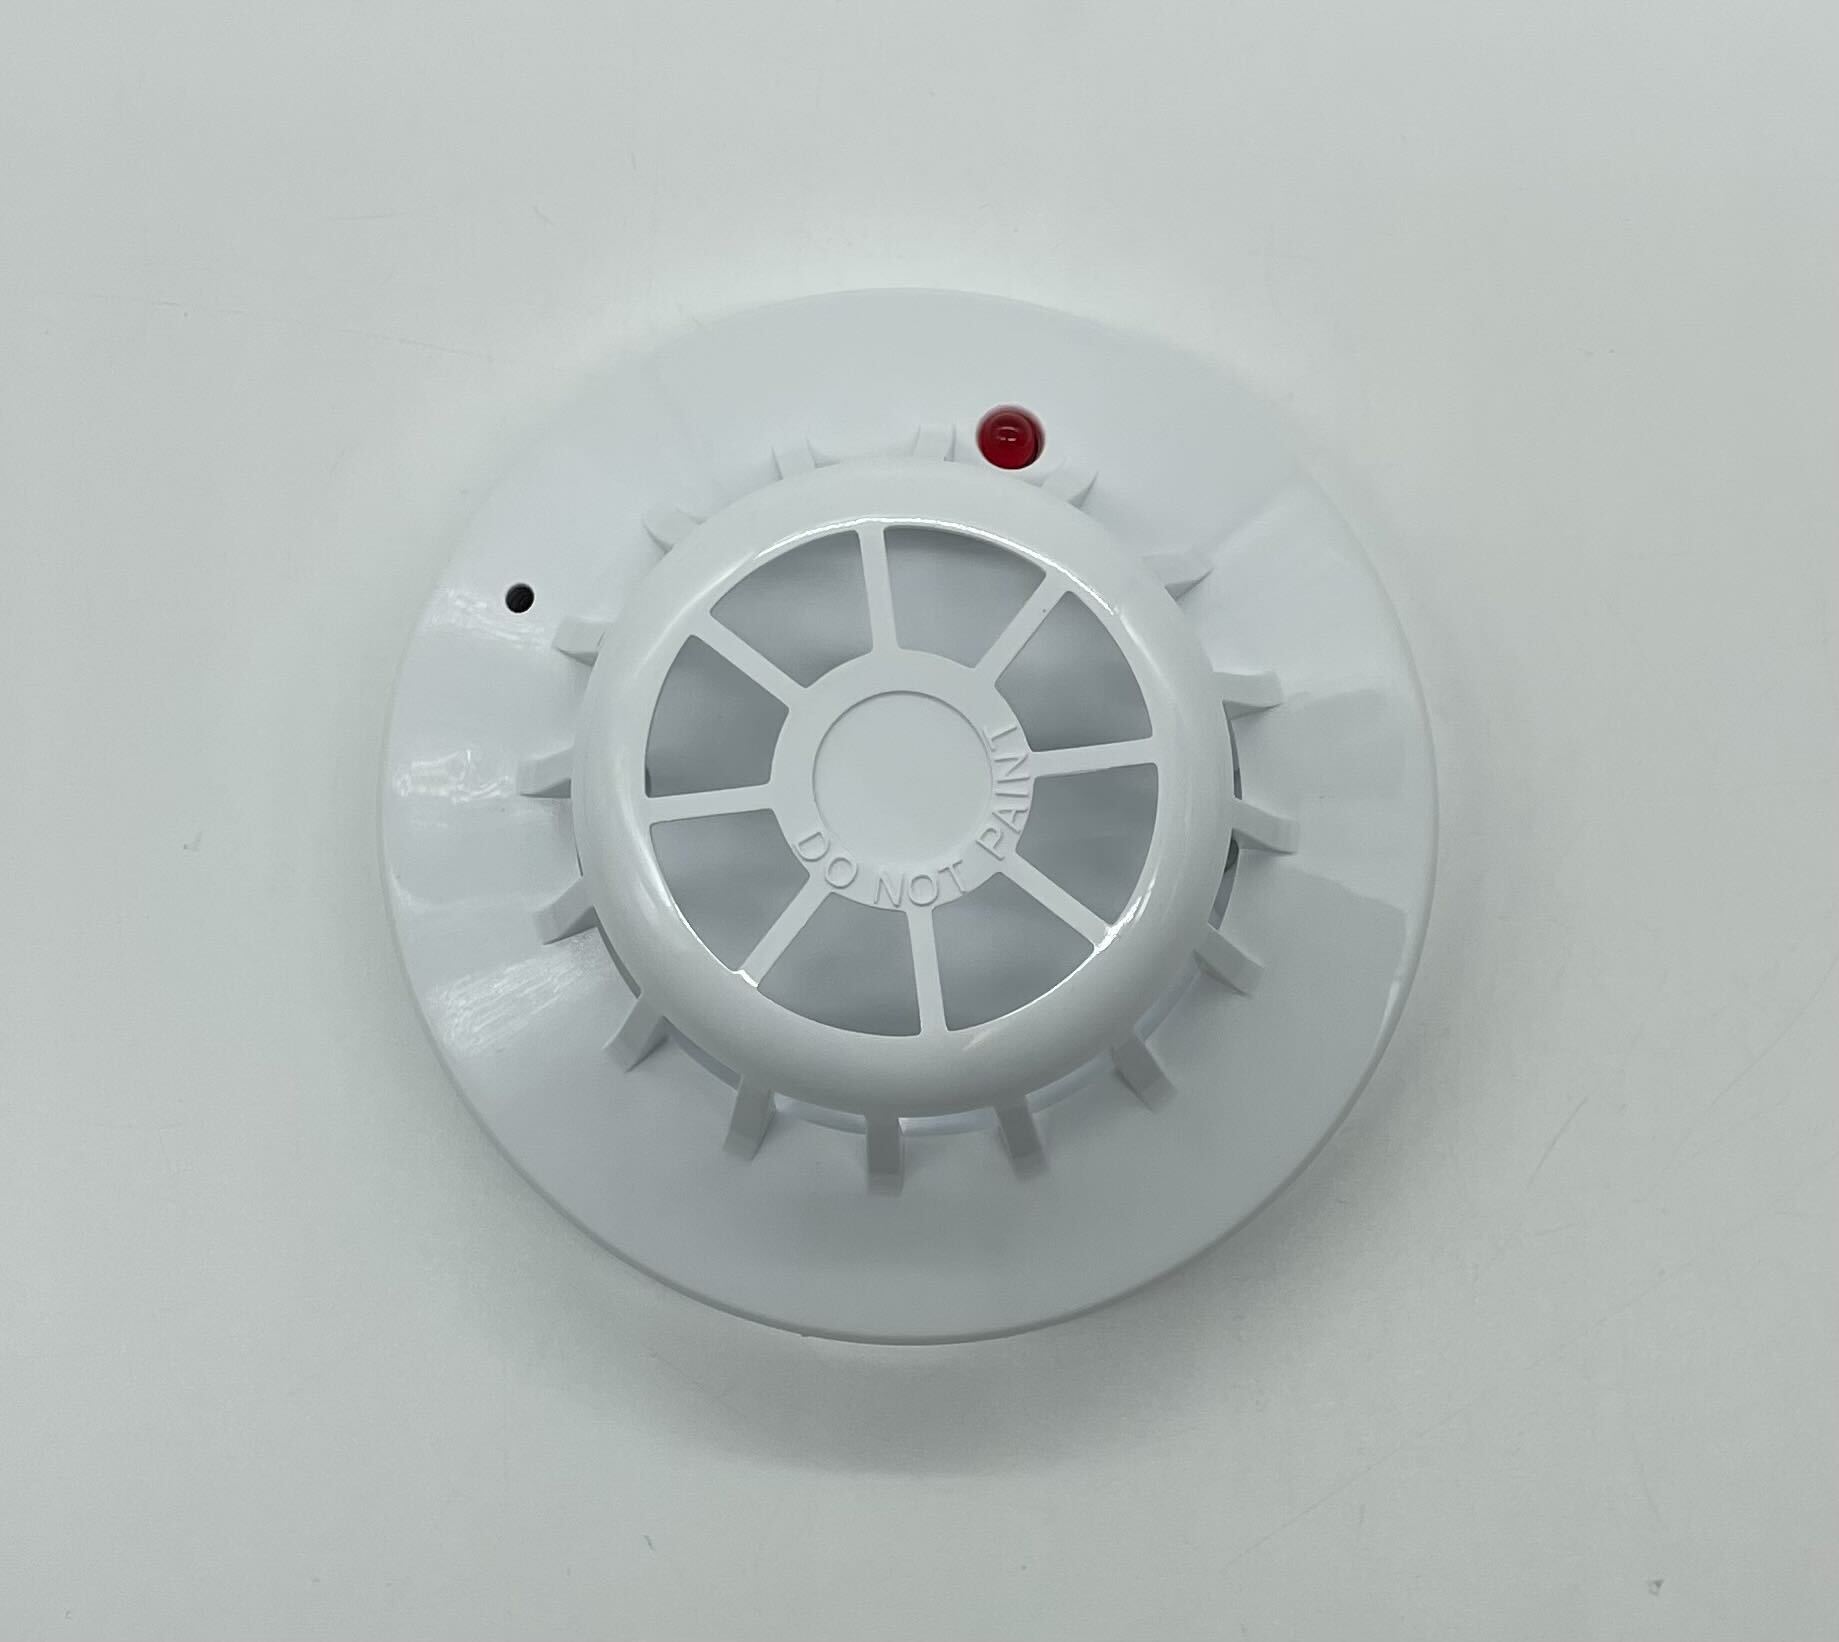 Secutron MRI-3300 - The Fire Alarm Supplier